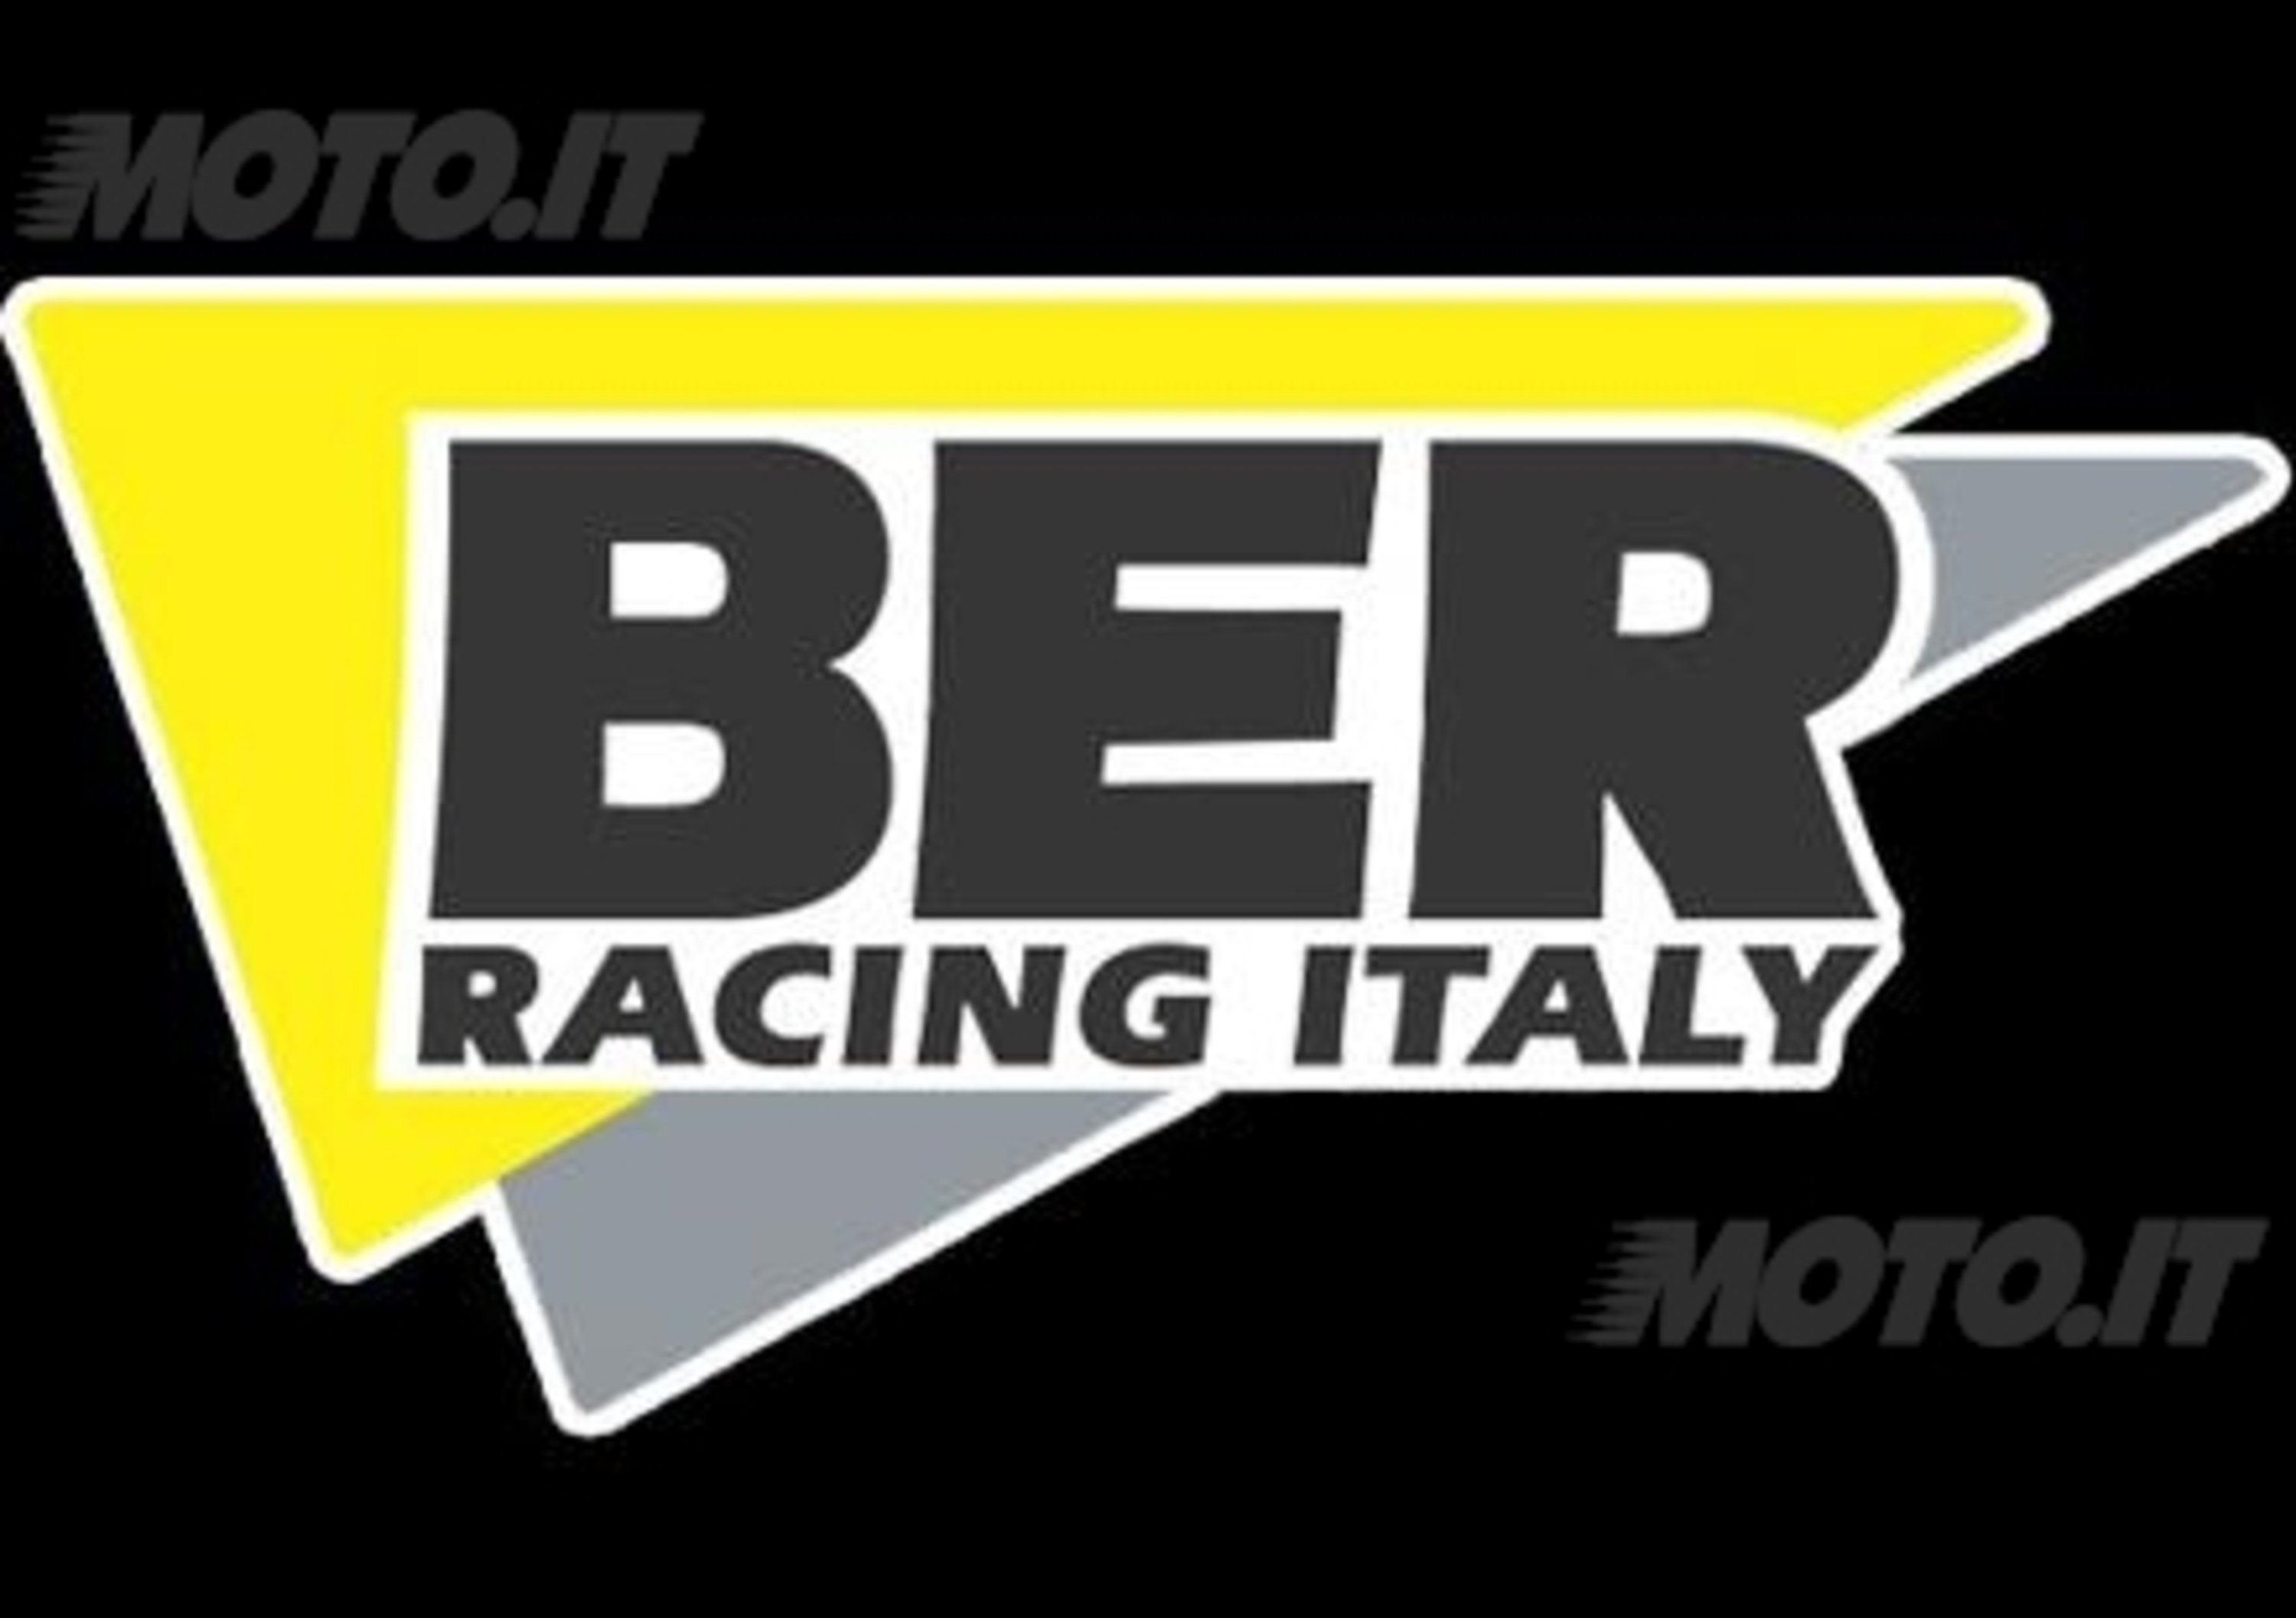 BER Racing Italy distribuir&agrave; Arai nella Penisola Iberica